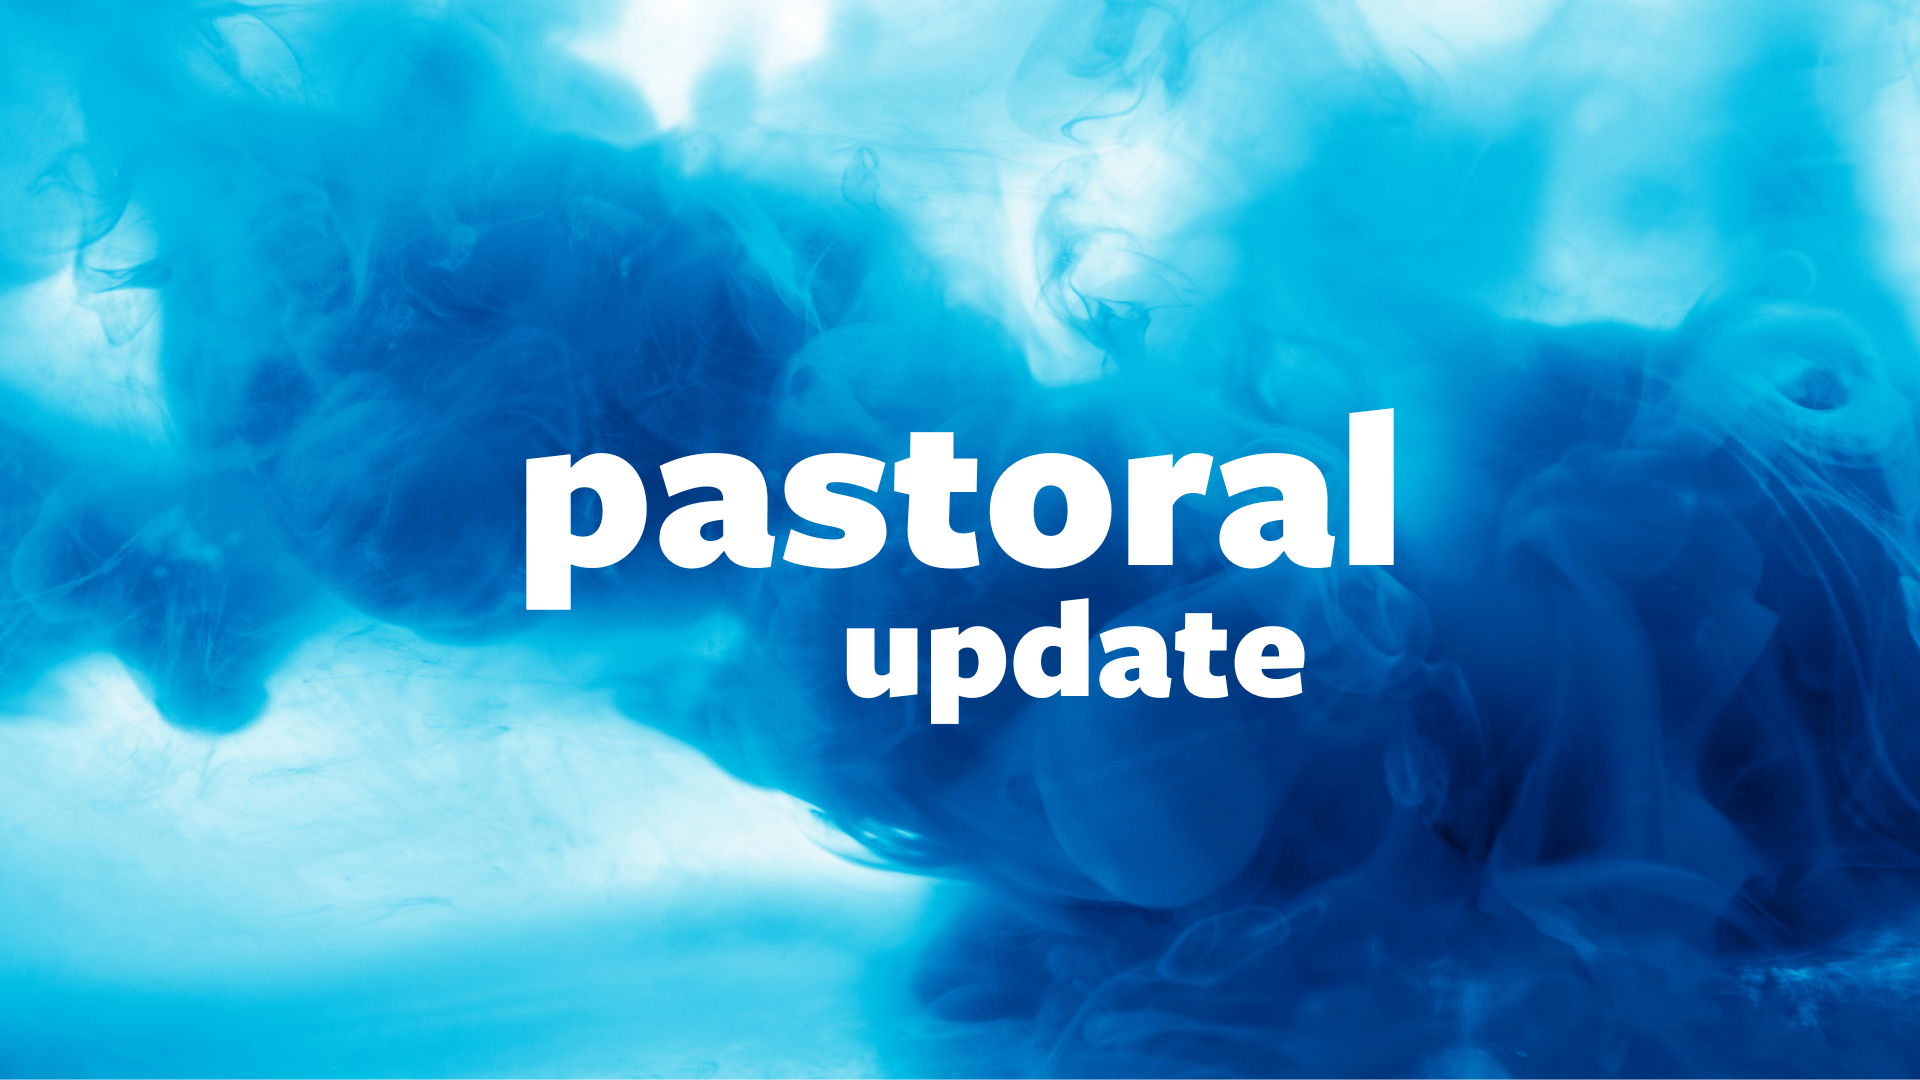 Pastoral update